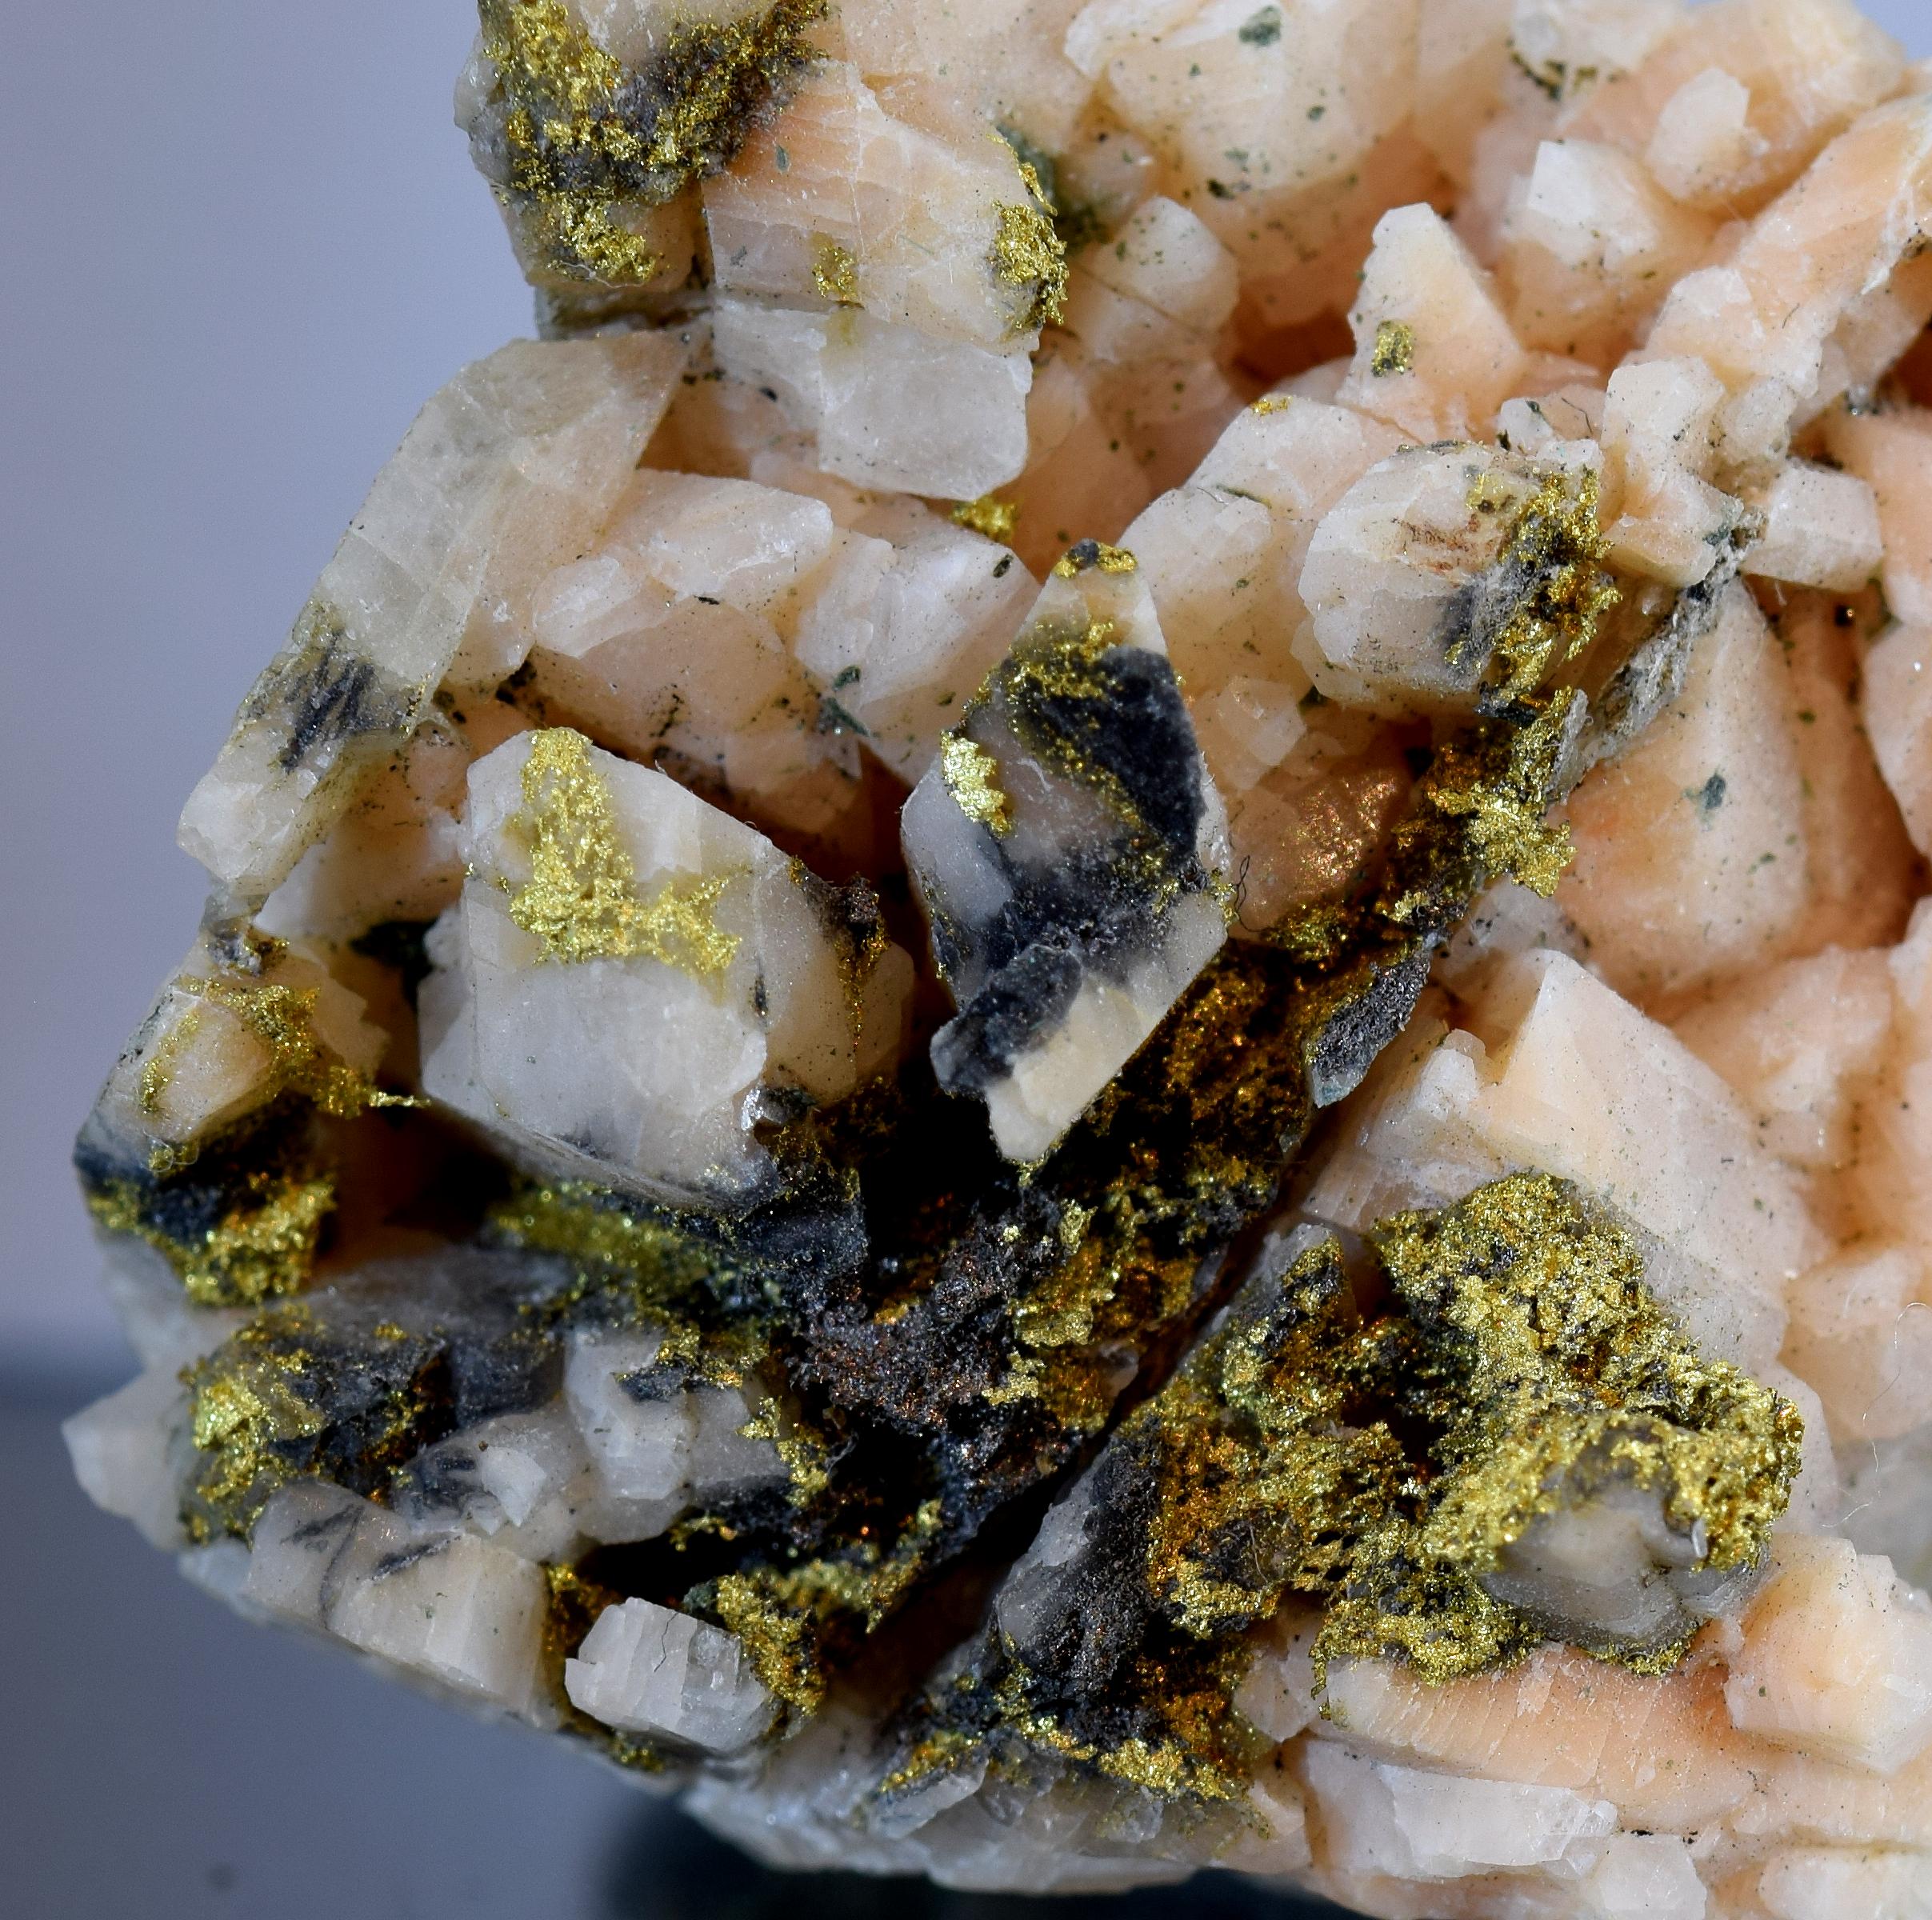 Gold, Baie Verte, Fine mineral specimen, Newfoundland Canada - 004